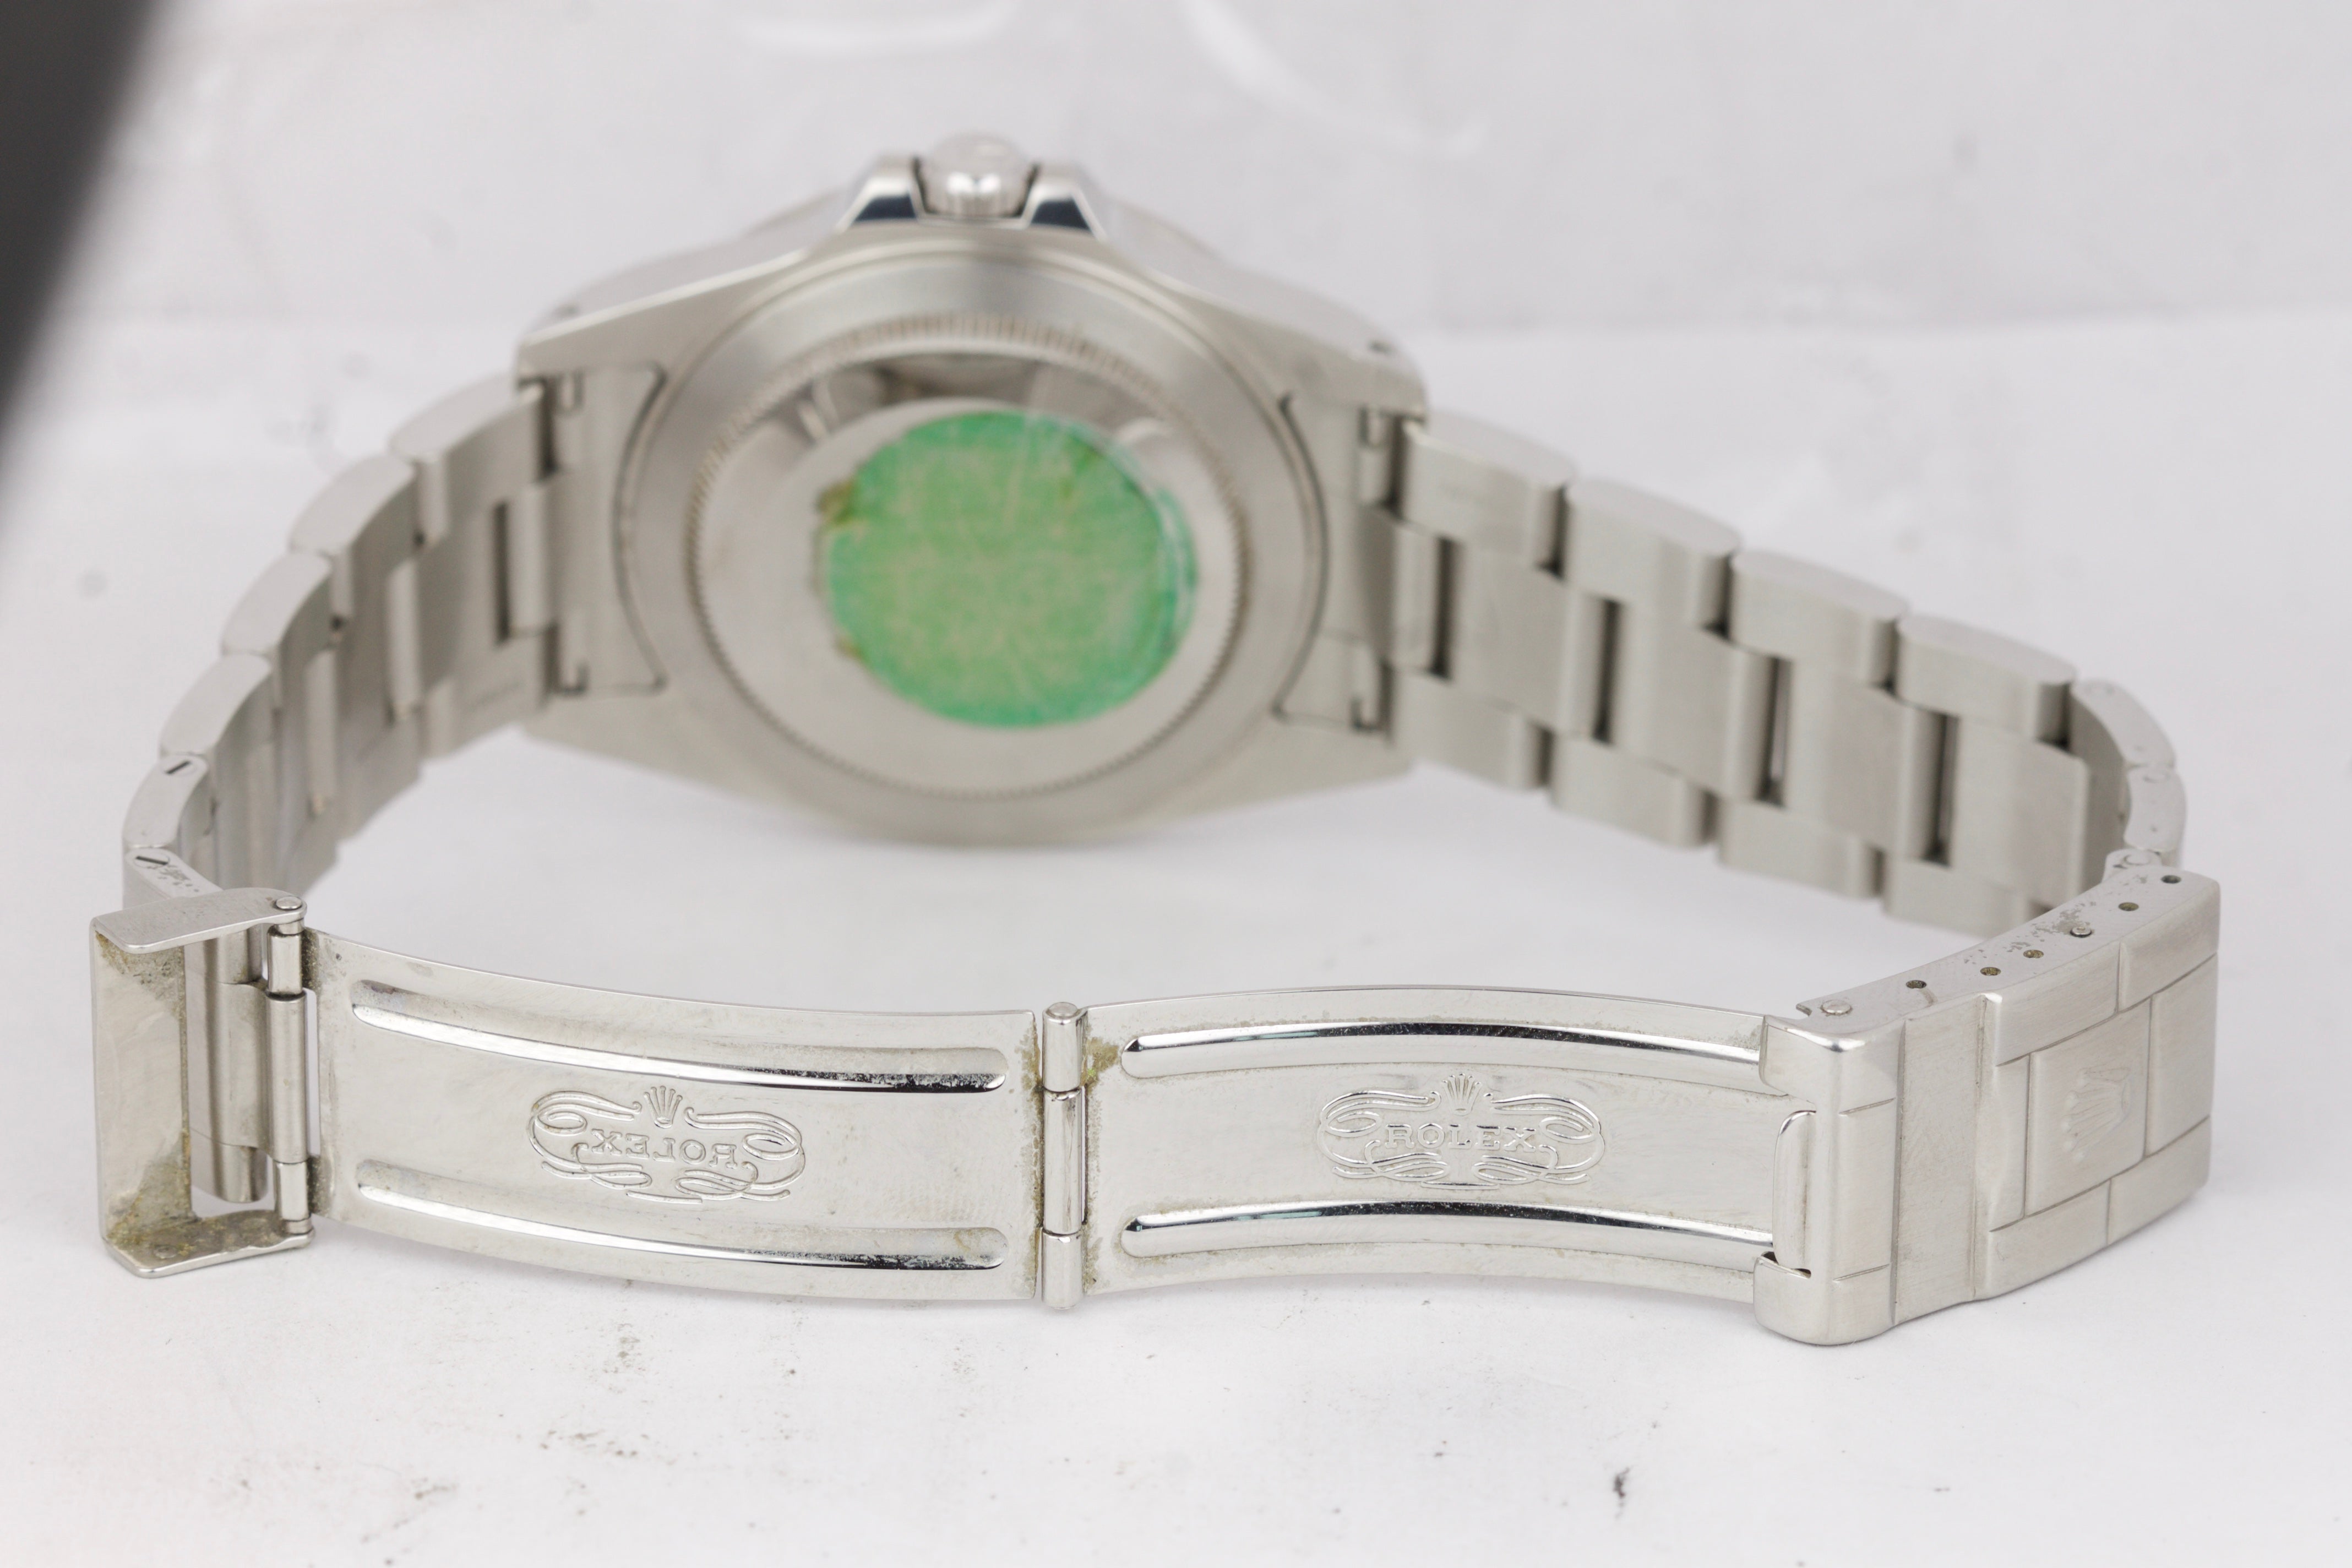 UNPOLISHED Rolex Explorer II SEL Stainless Steel Black Date GMT 40mm Watch 16570